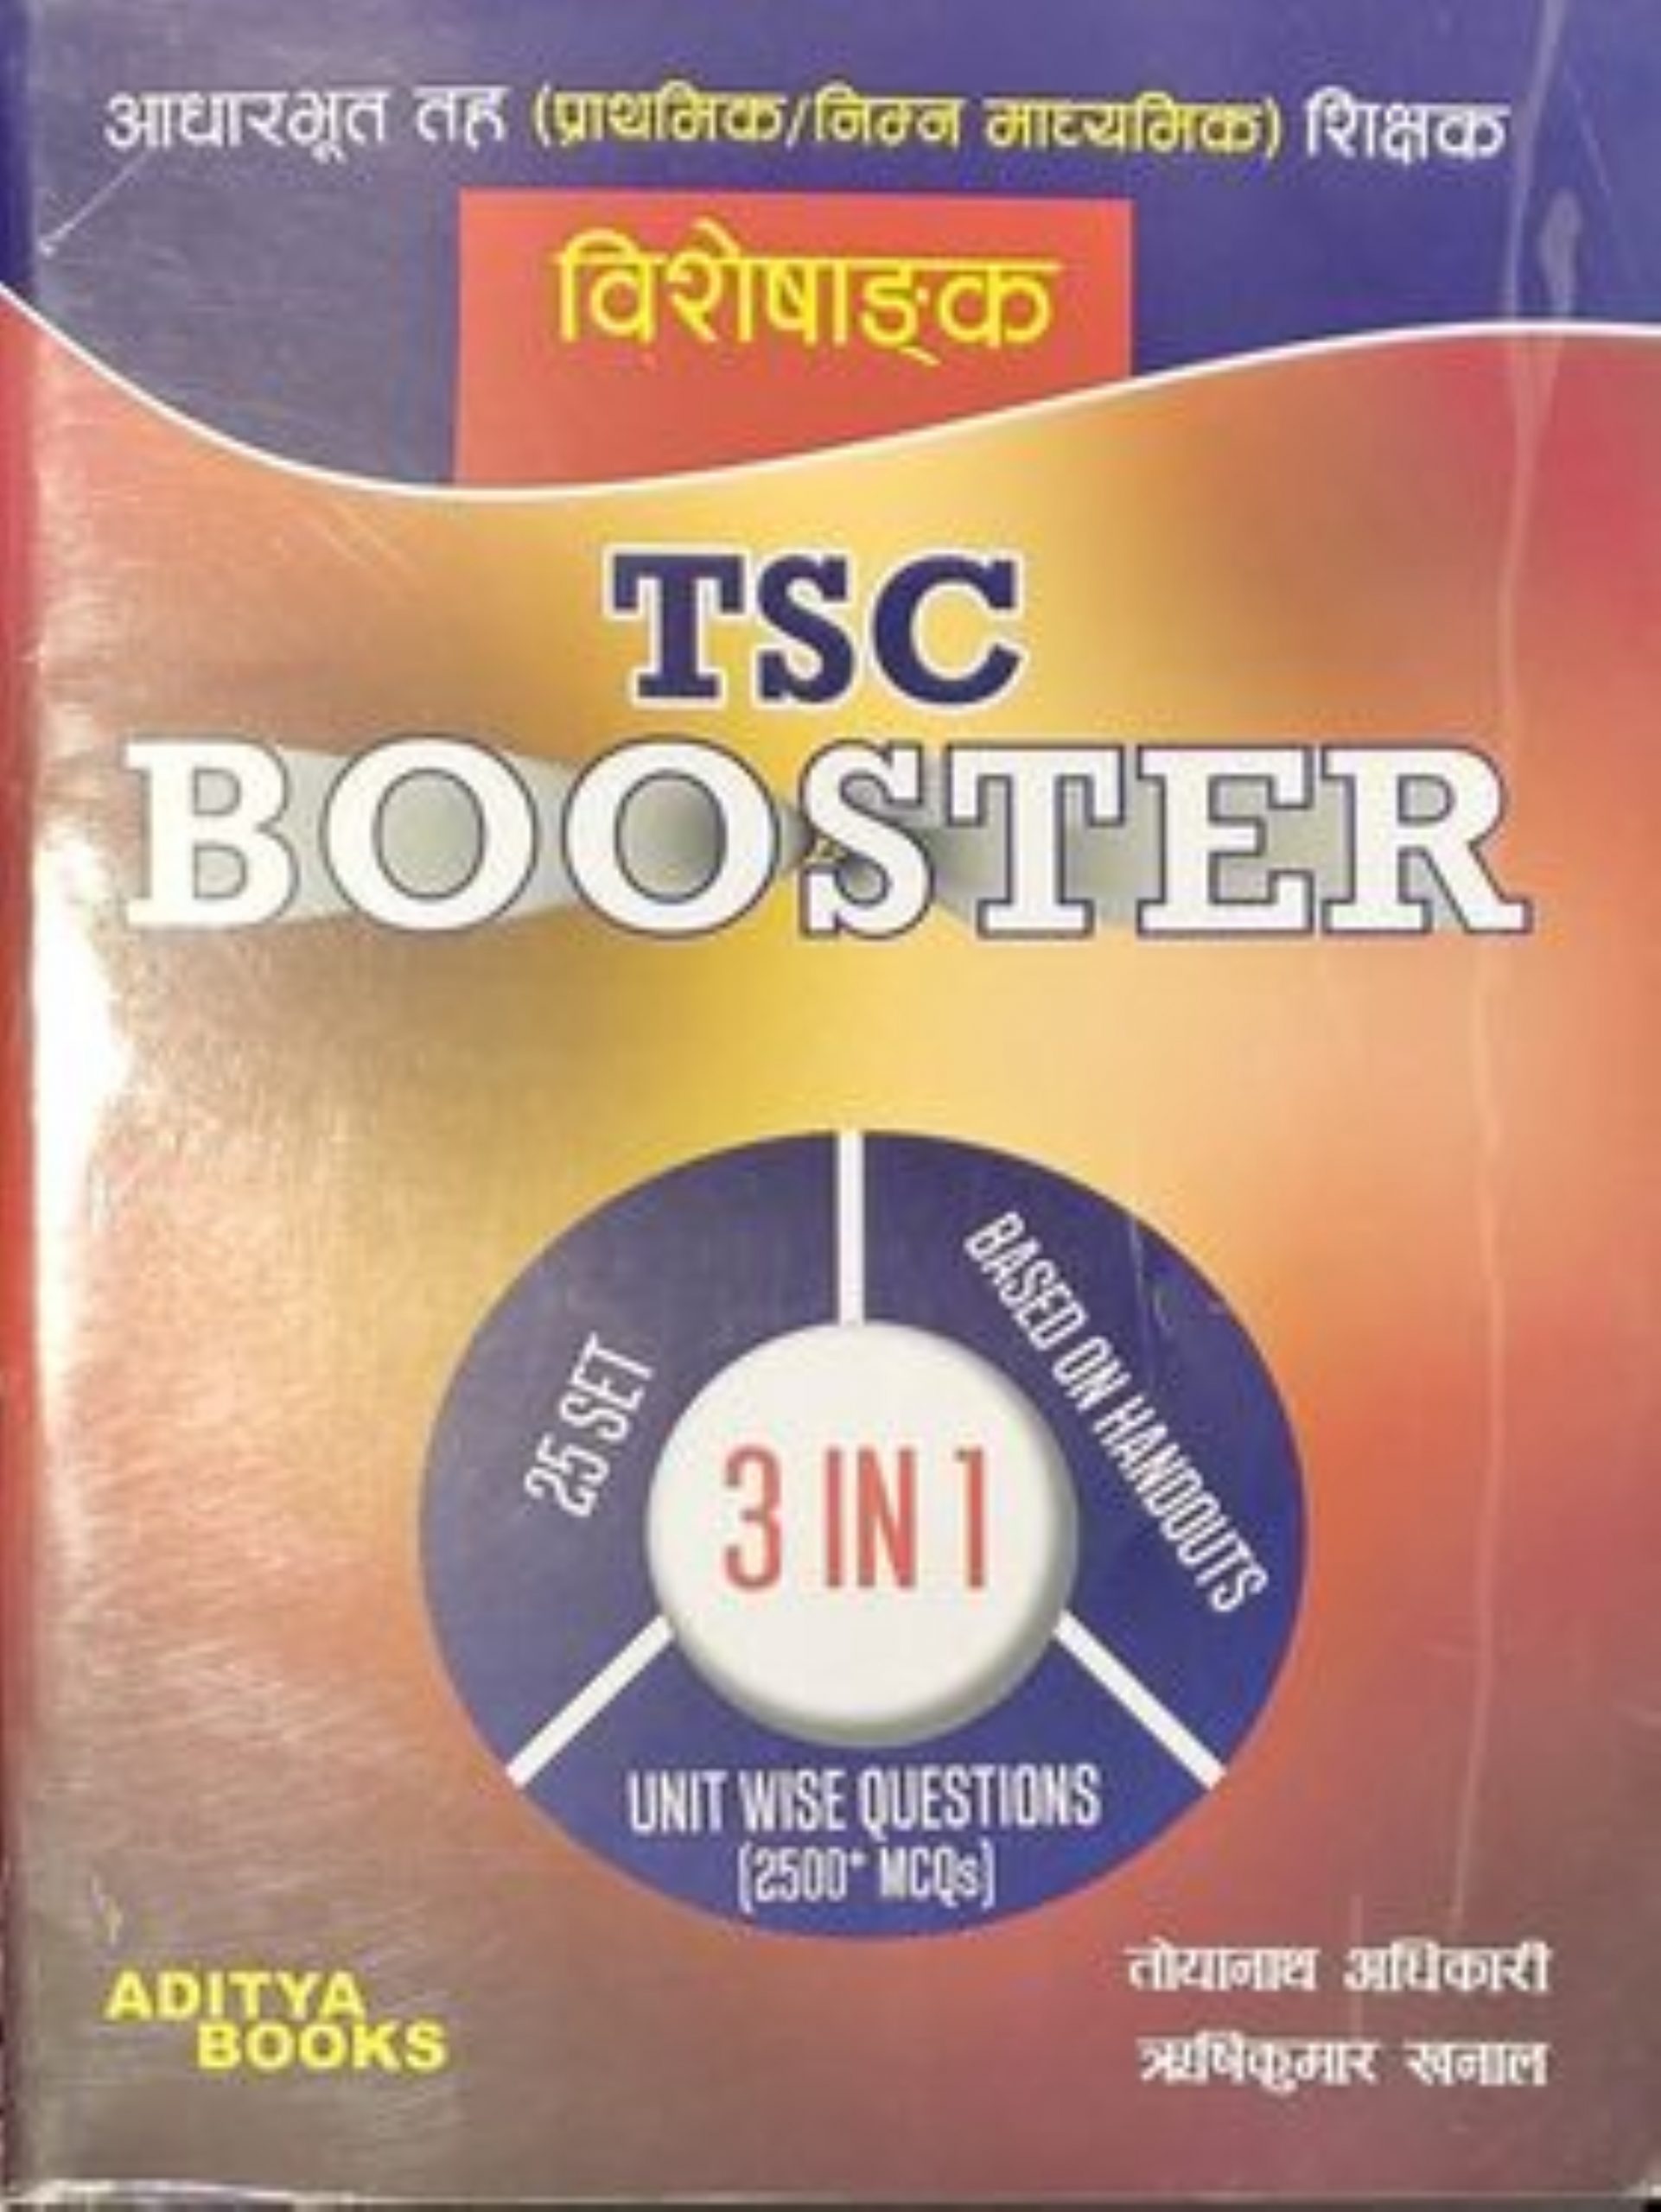 TSC Booster आधारभूत तह शिक्षक विशेषाङ्क (Adharbhut taha Shikshak Bisheshanka)